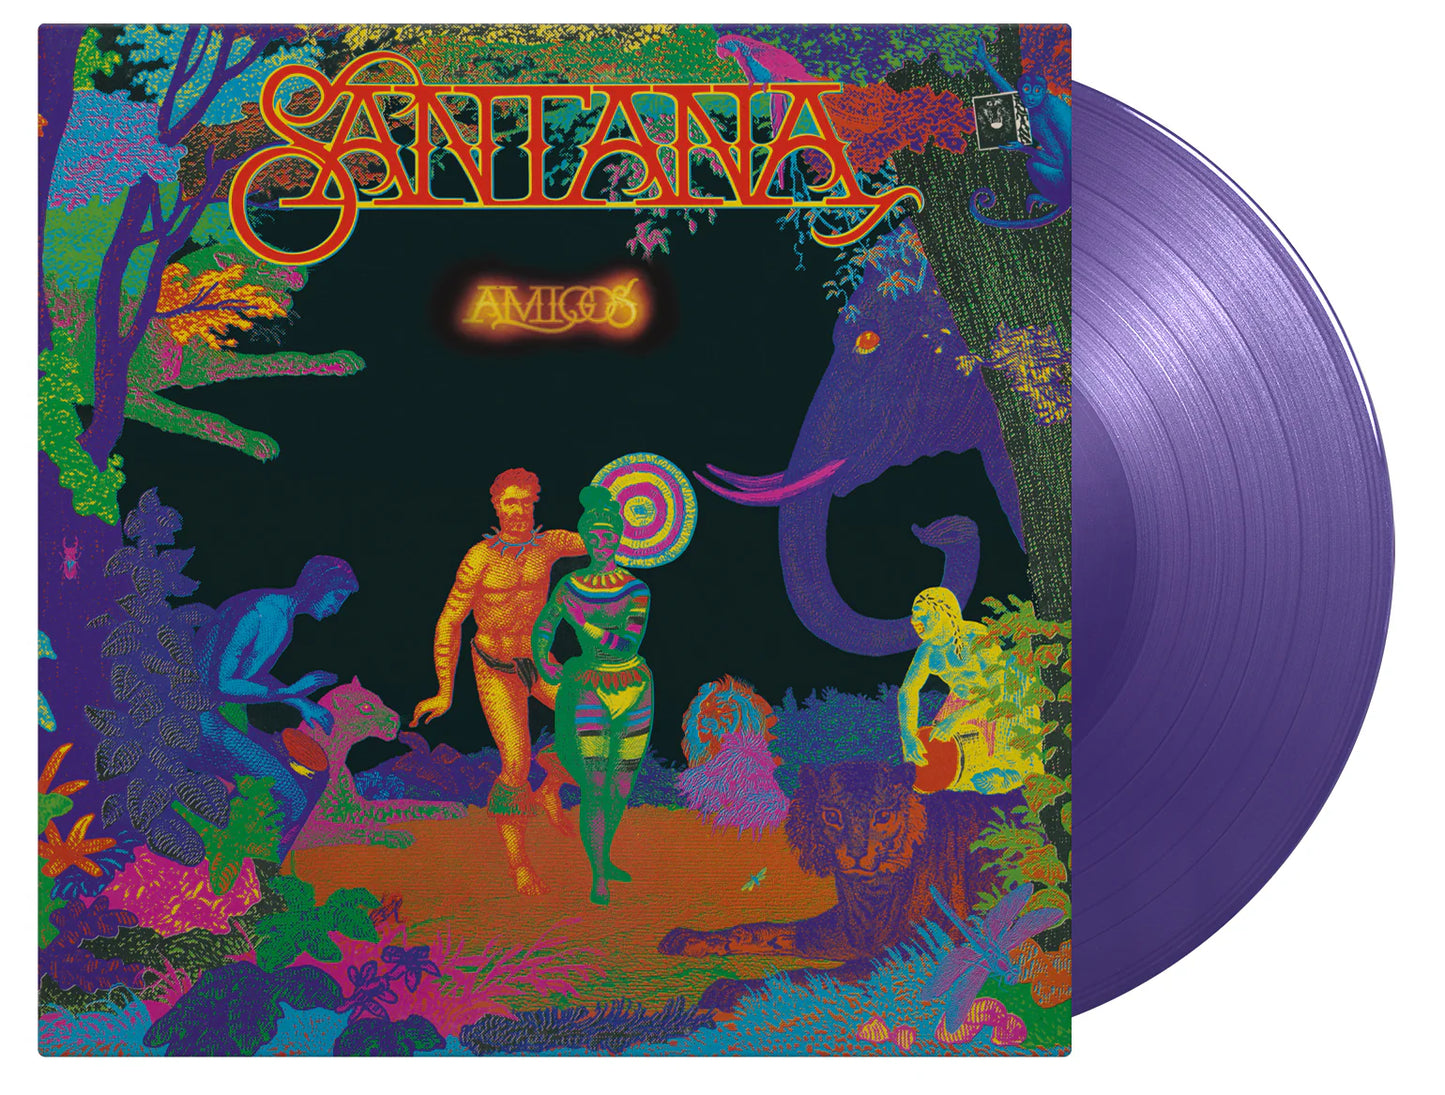 Santana - Amigos Vinyl -  180g Audiophile / Limited Anniversary Edition